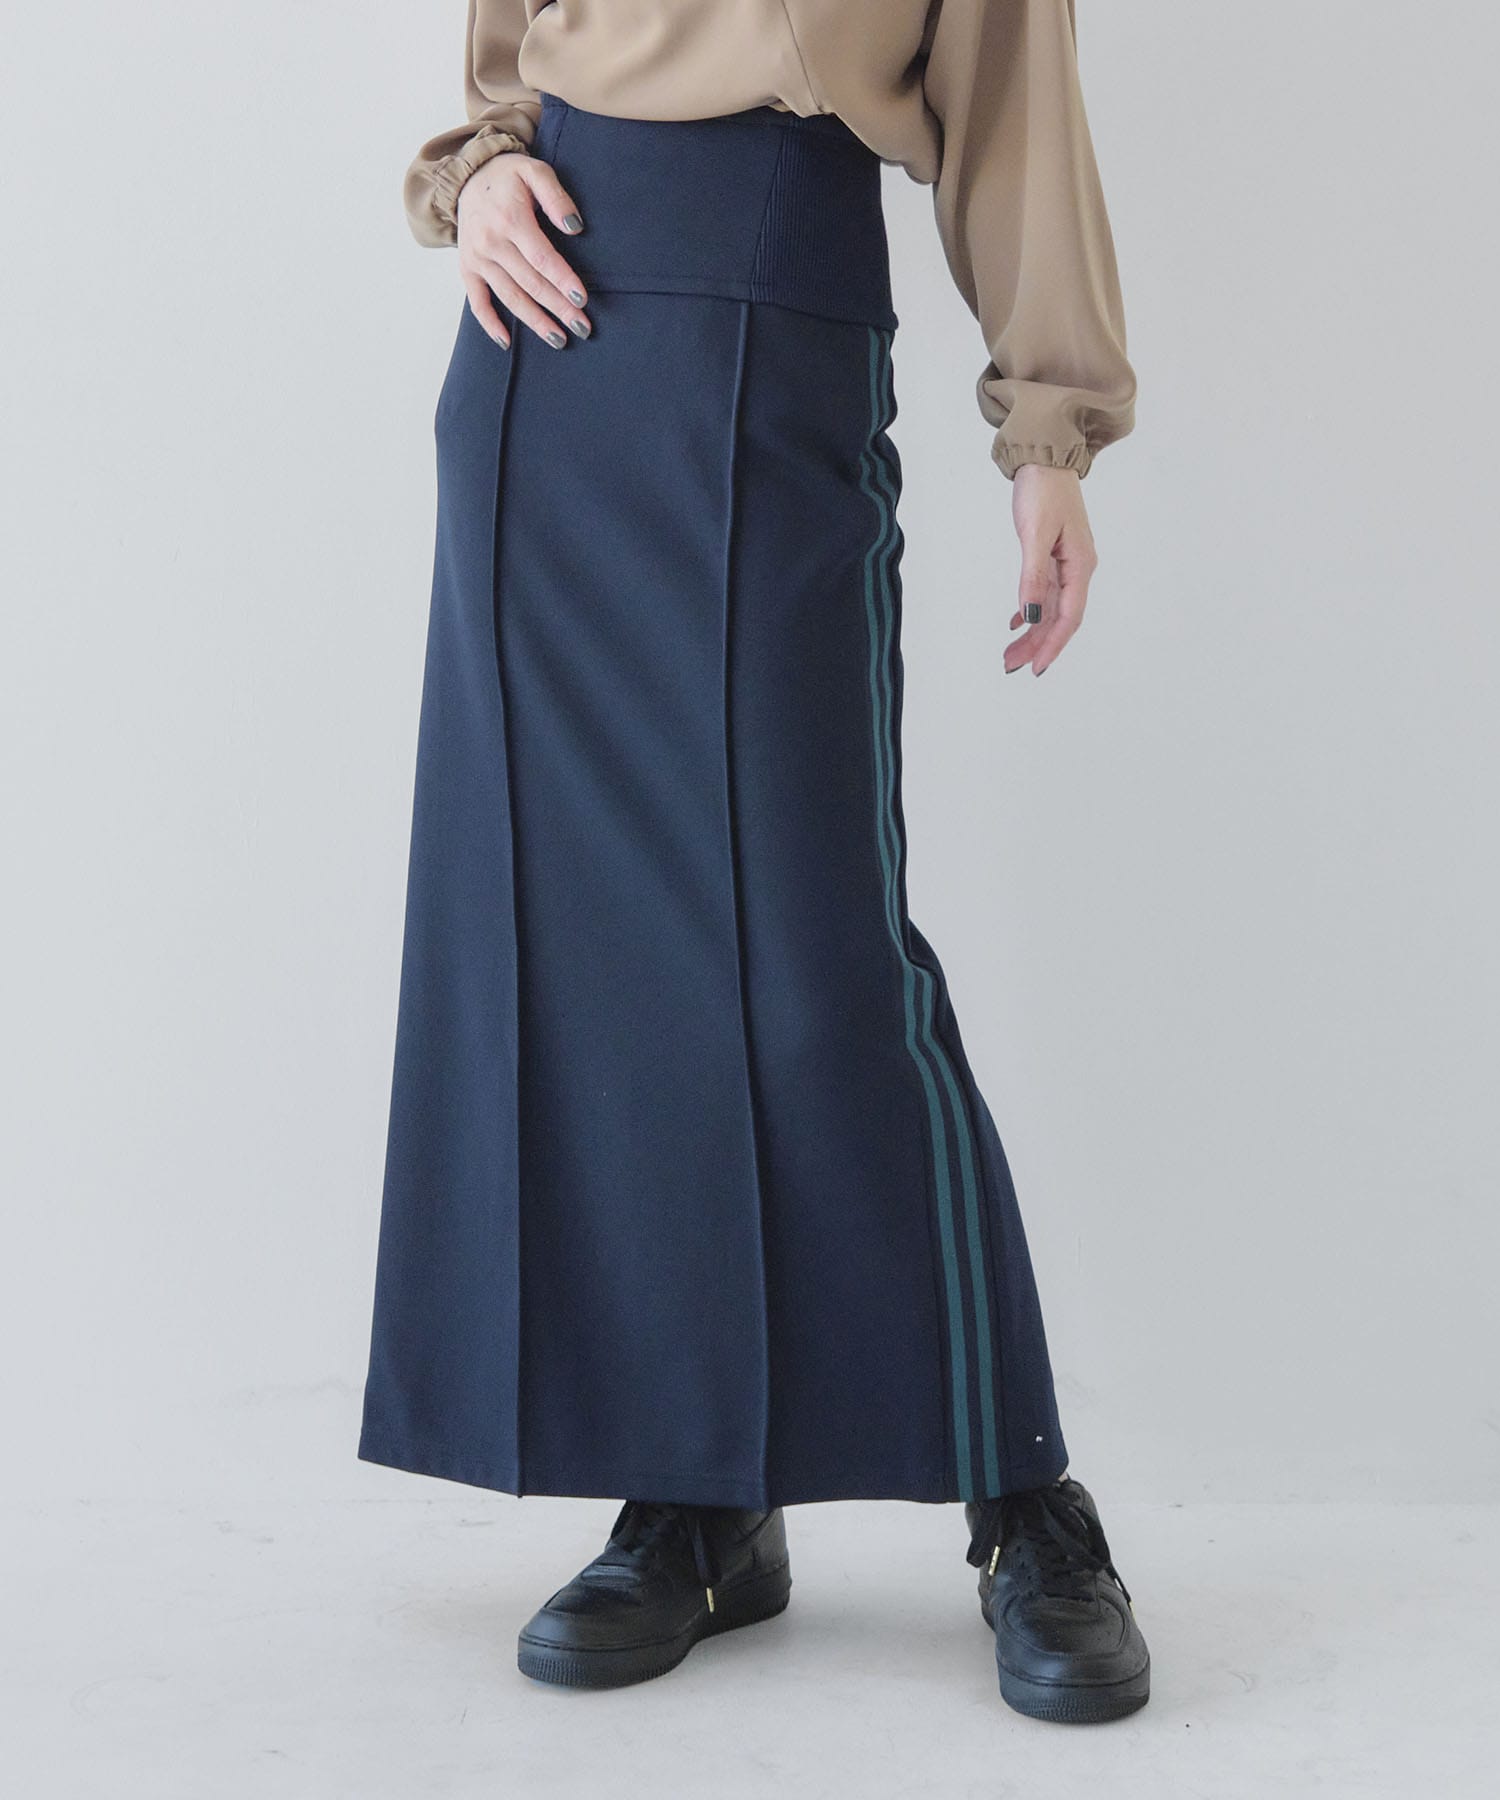 A +TOKYO トラックパターンフレアースカート abitur.gnesin